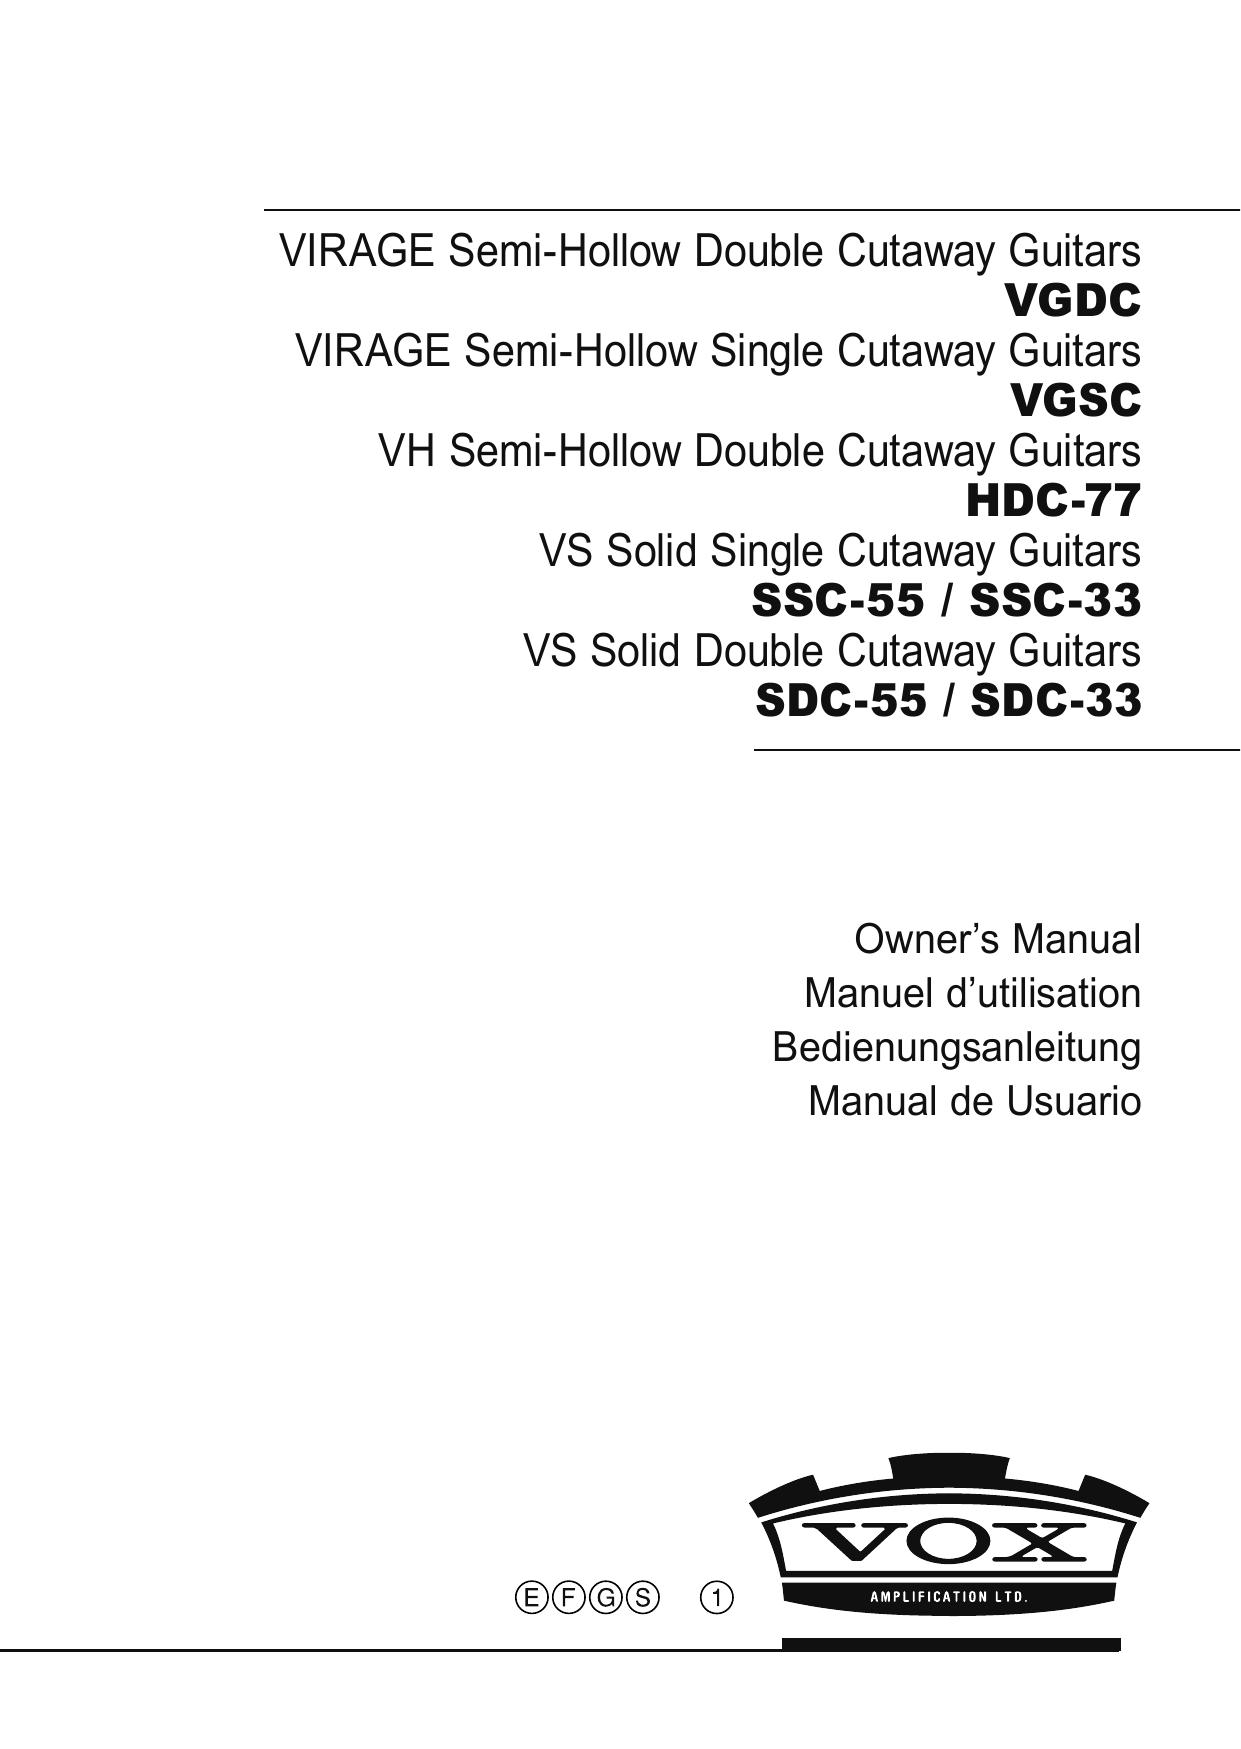 Vox SSC-55 Guitar User Manual